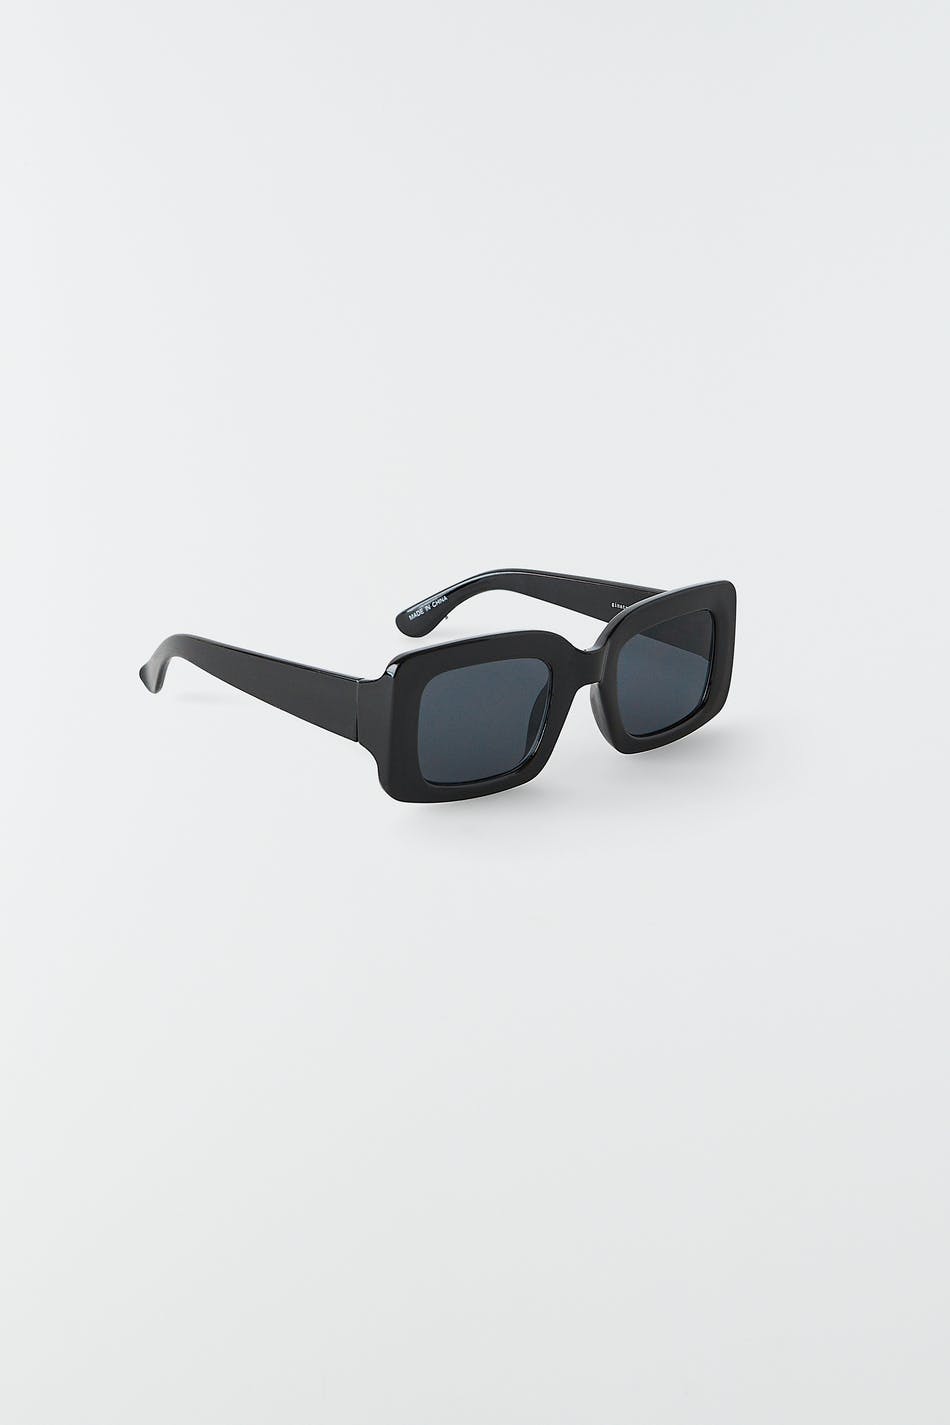 Gina Tricot Nea sunglasses ONESZ  Black (9000)